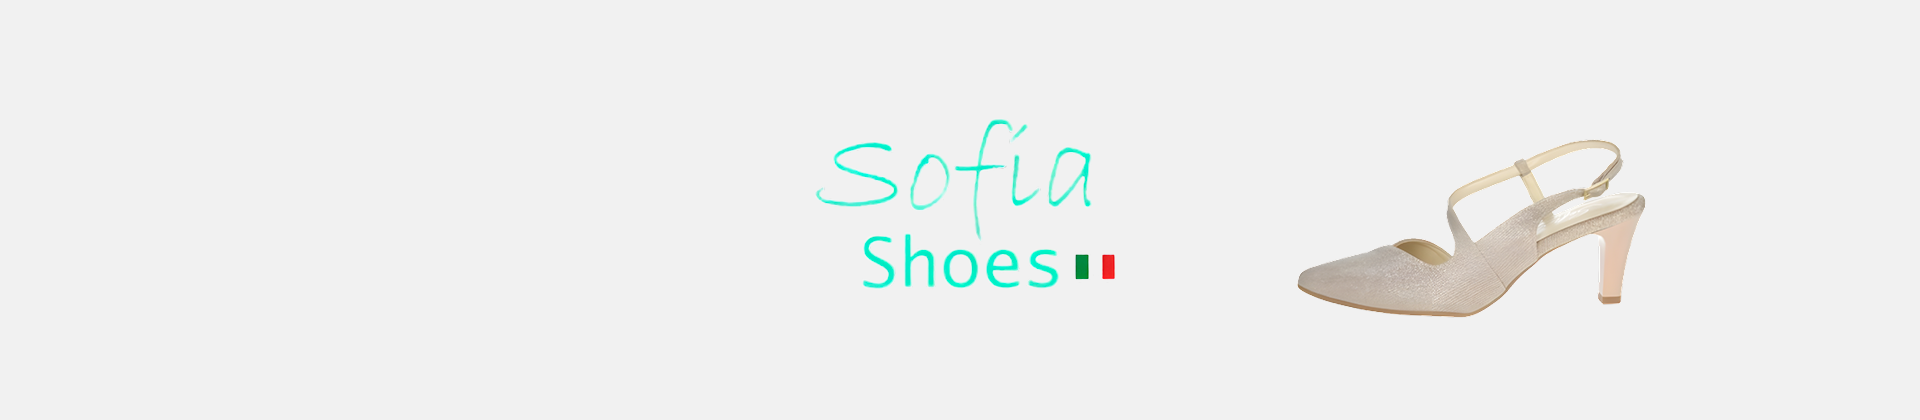 Sofia Shoes | sandali da donna a prezzi accessibili (2)